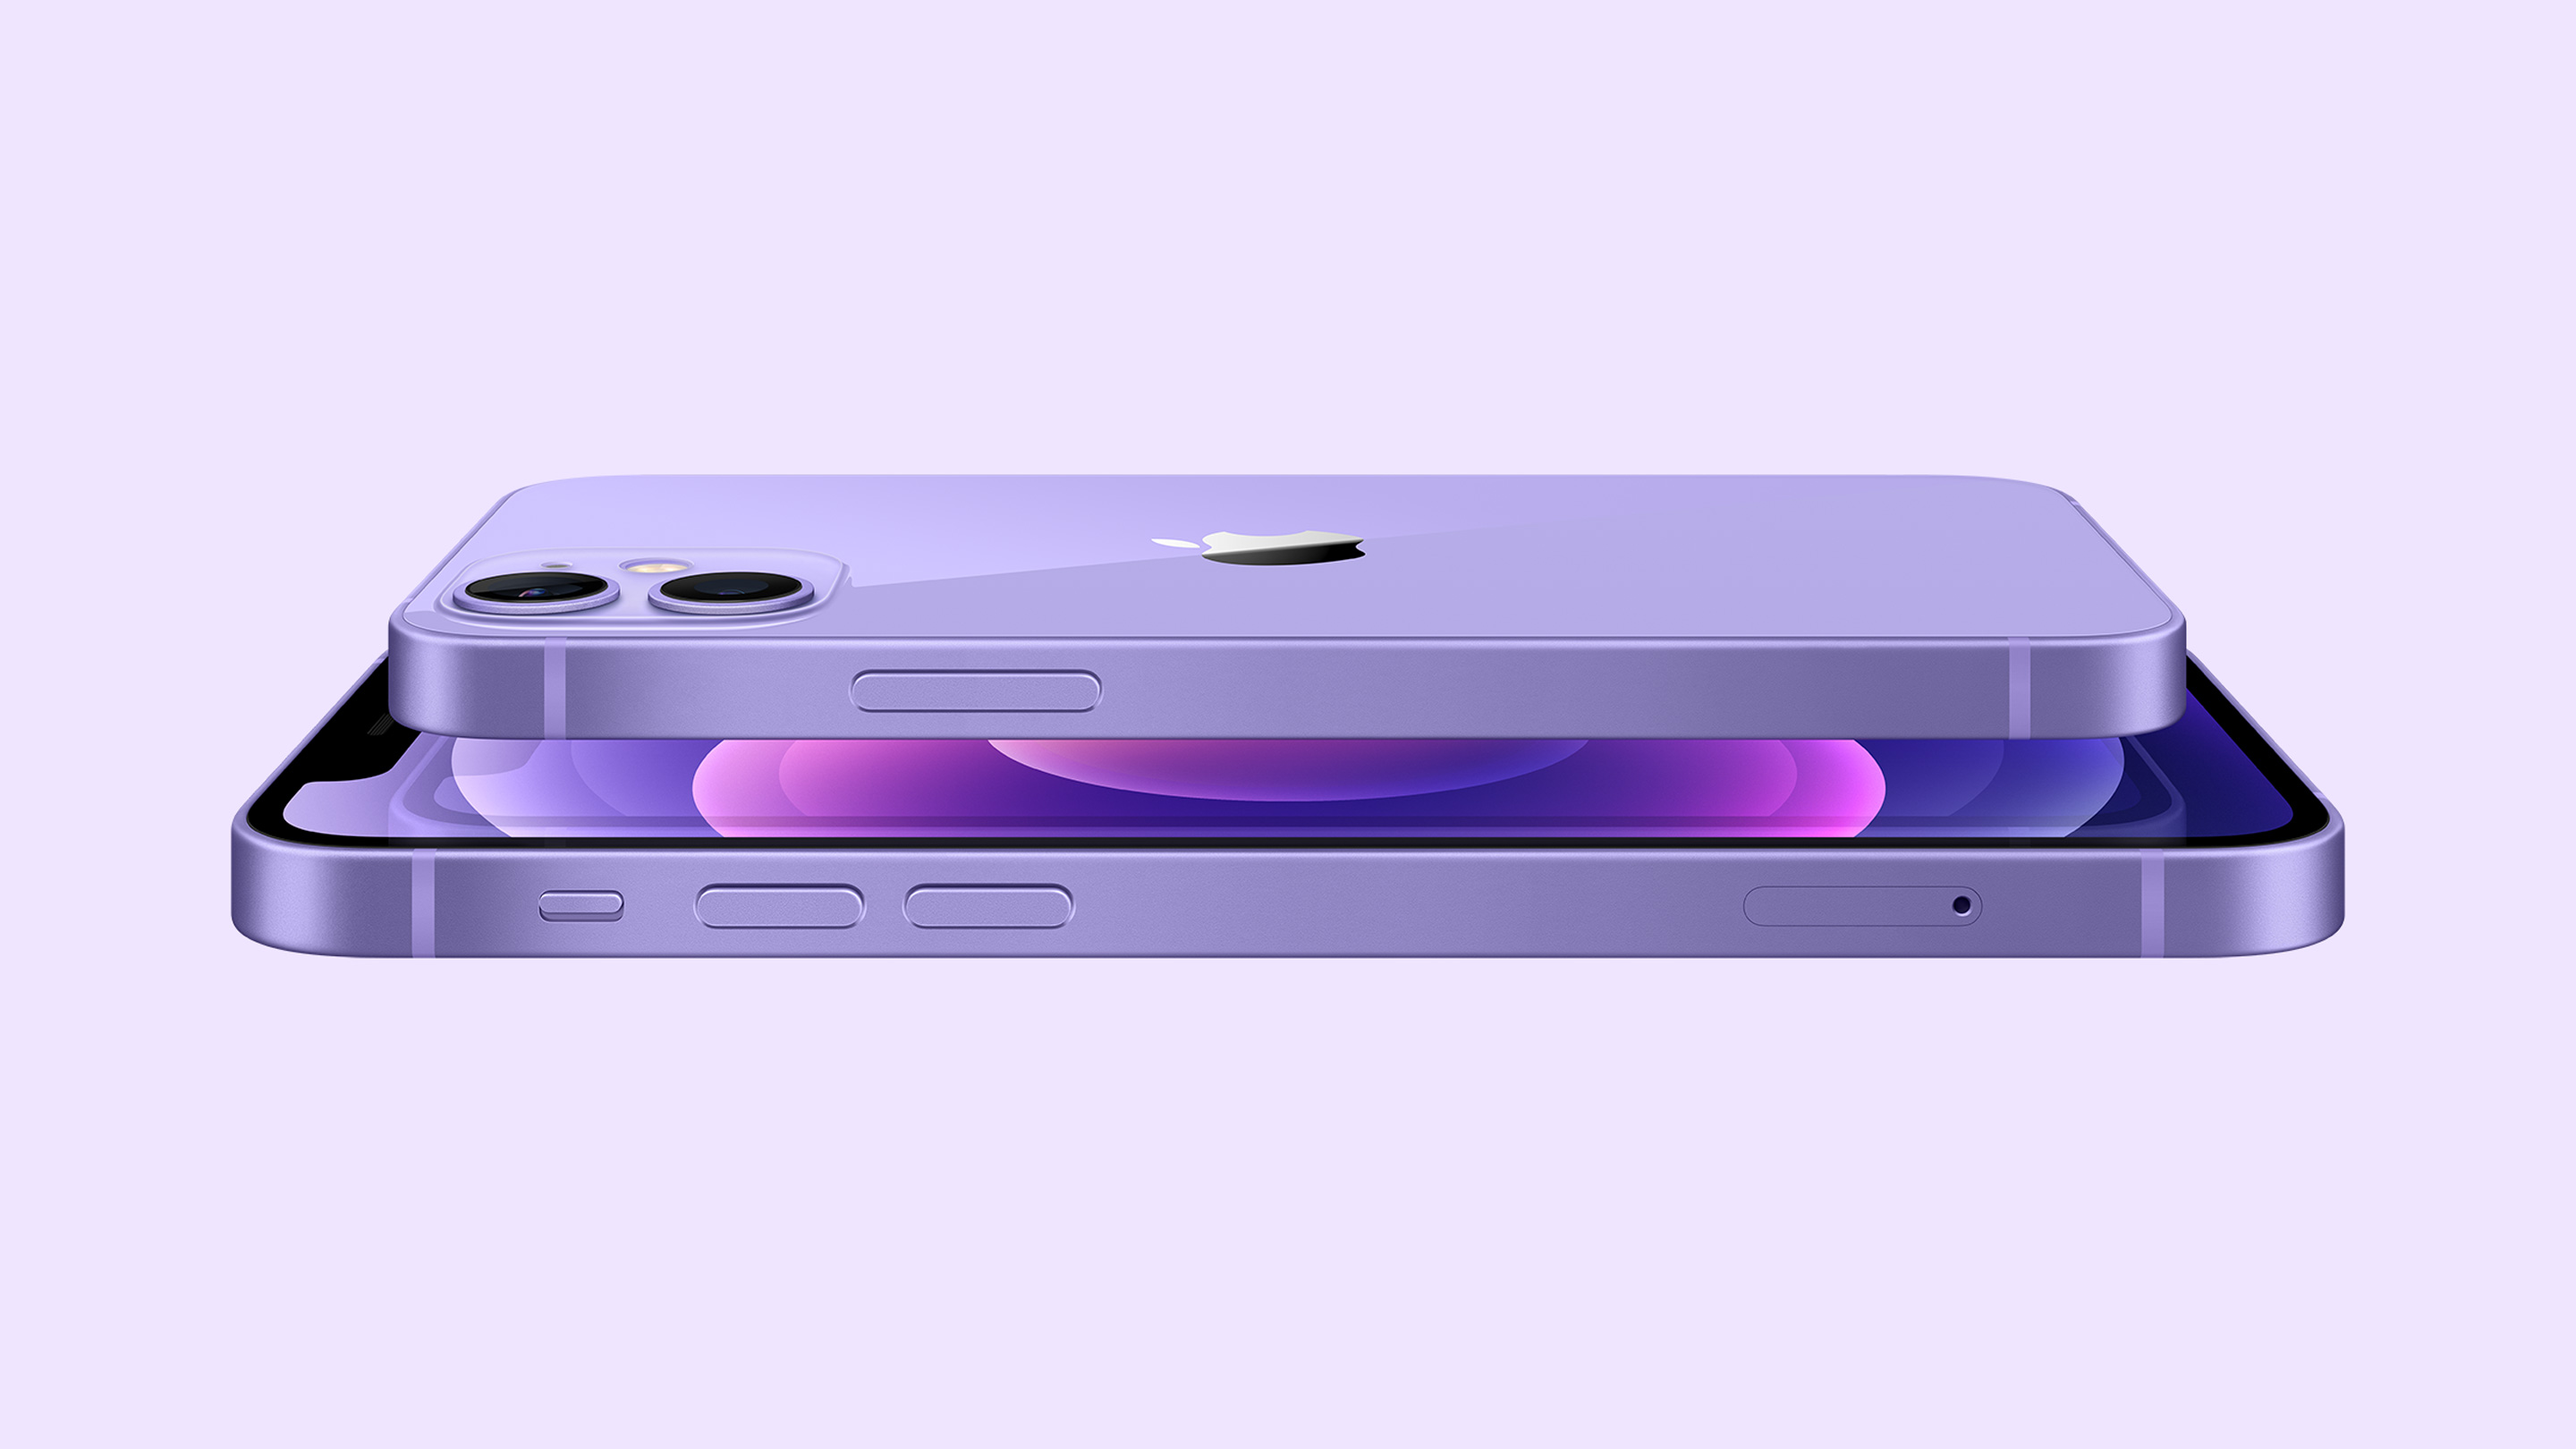 Iphone 12 россии. Apple iphone 12 Purple. Apple iphone 12 Mini. Apple iphone 13 Pro Max фиолетовый. Iphone 12 Mini фиолетовый.